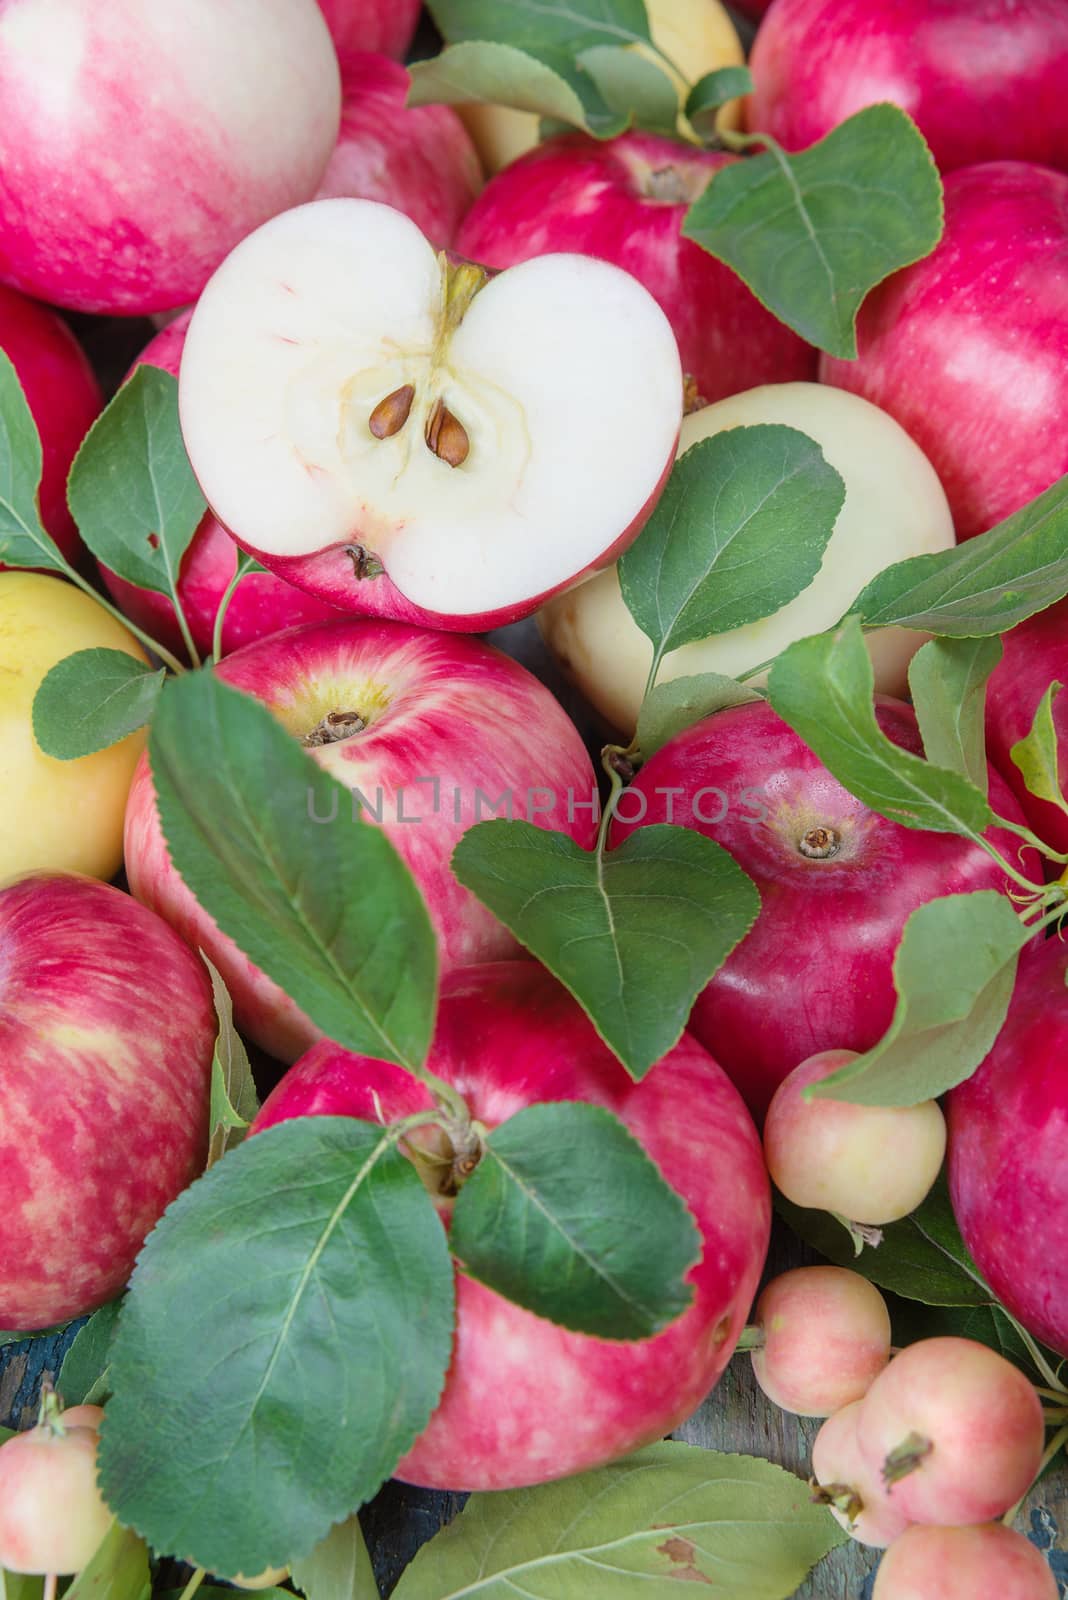 Many red apples by Epitavi